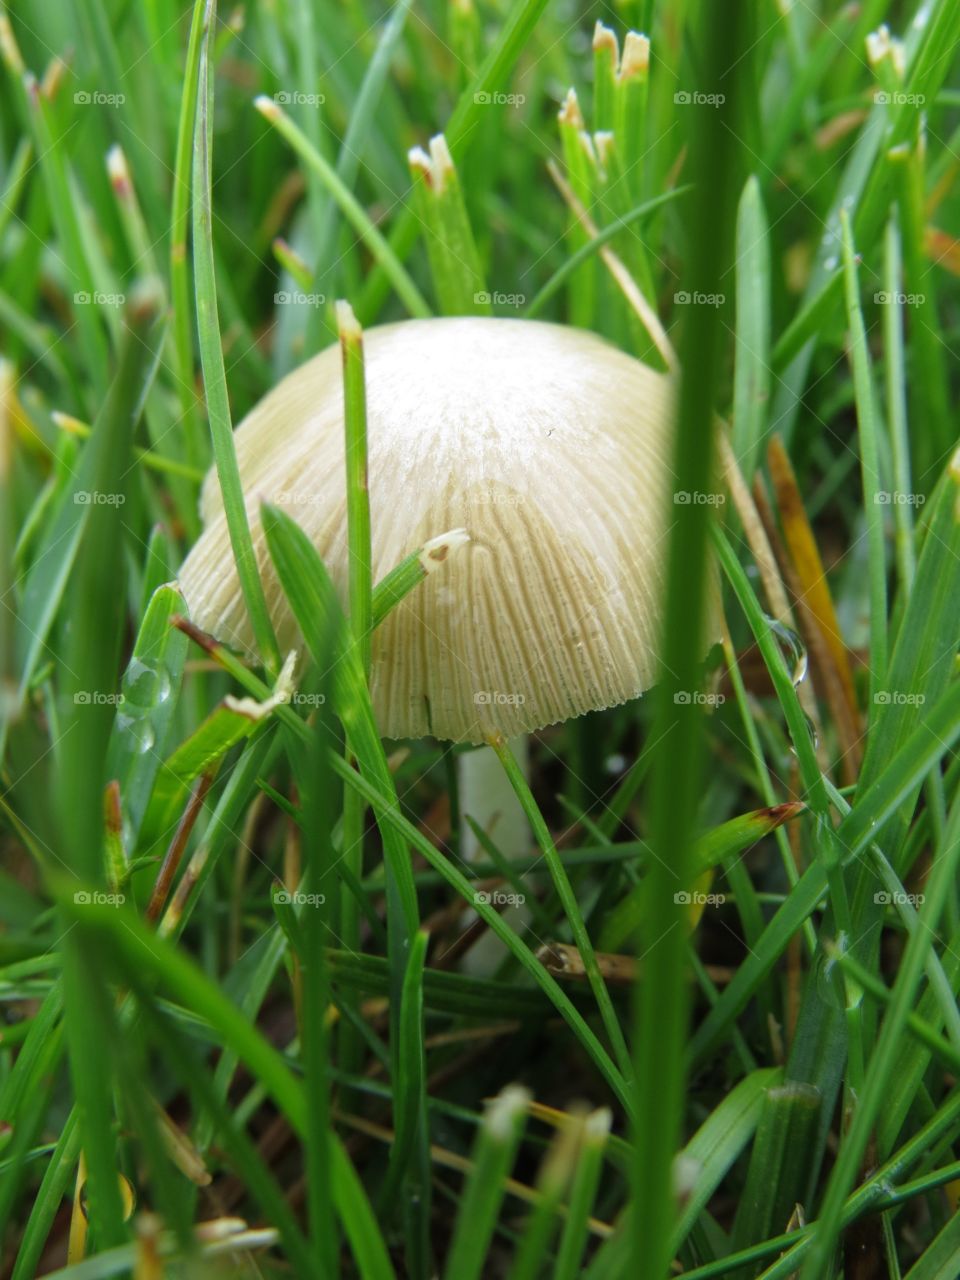 A pretty petite mushroom